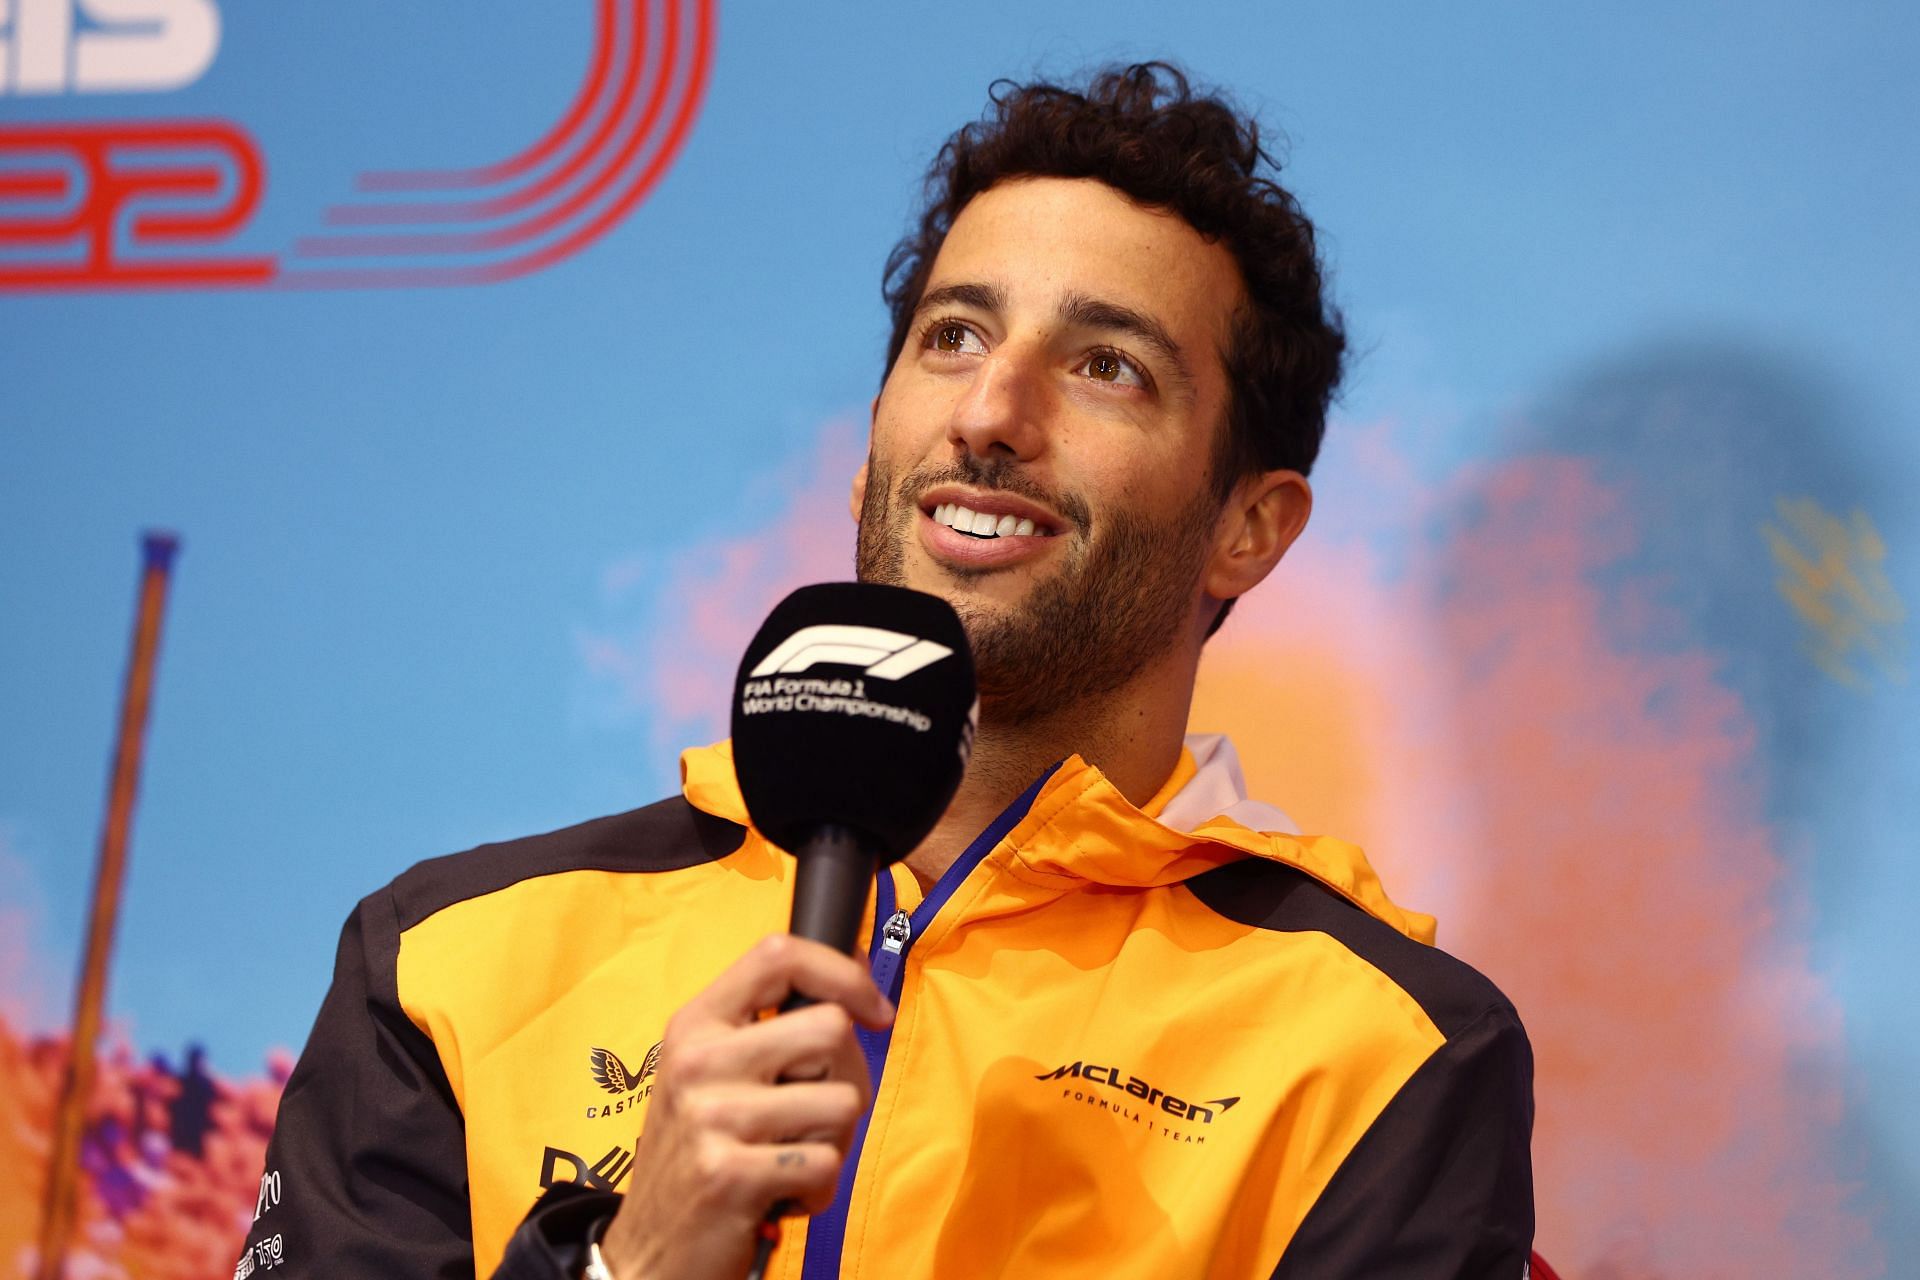 Daniel Ricciardo recalls his favorite moments at the Red Bull ring ...